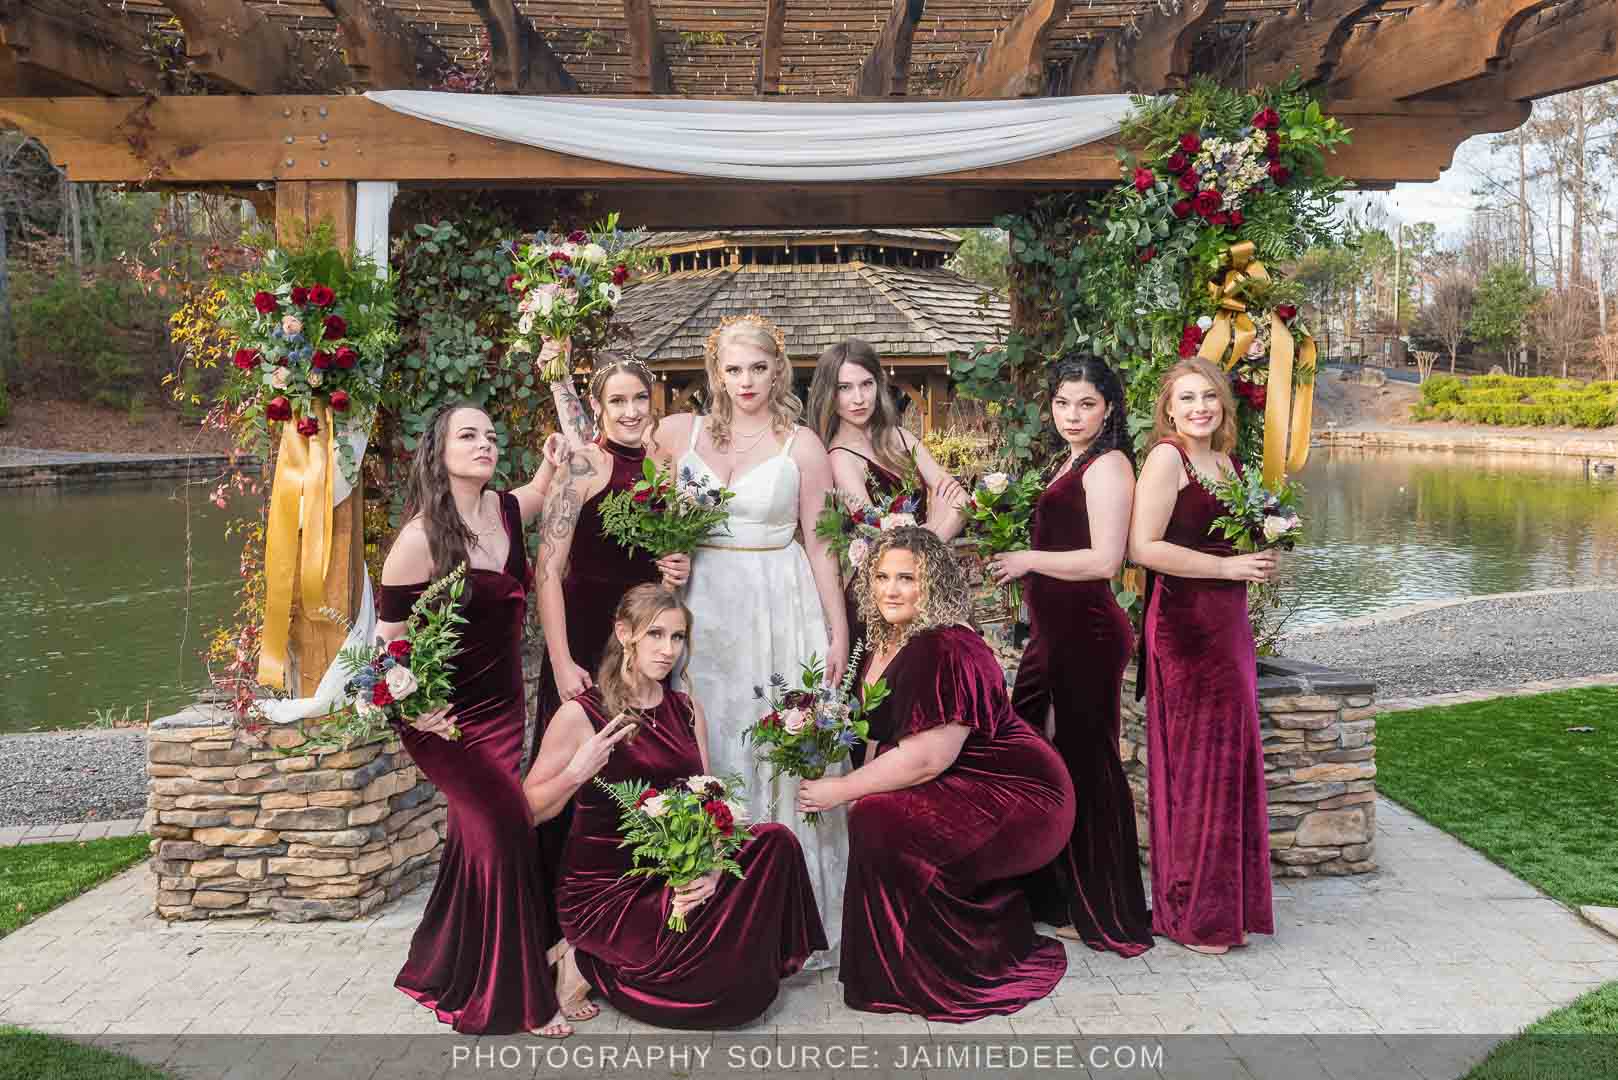 Rocky's Lake Estate Wedding Venue - bridal party portrait with bridesmaids